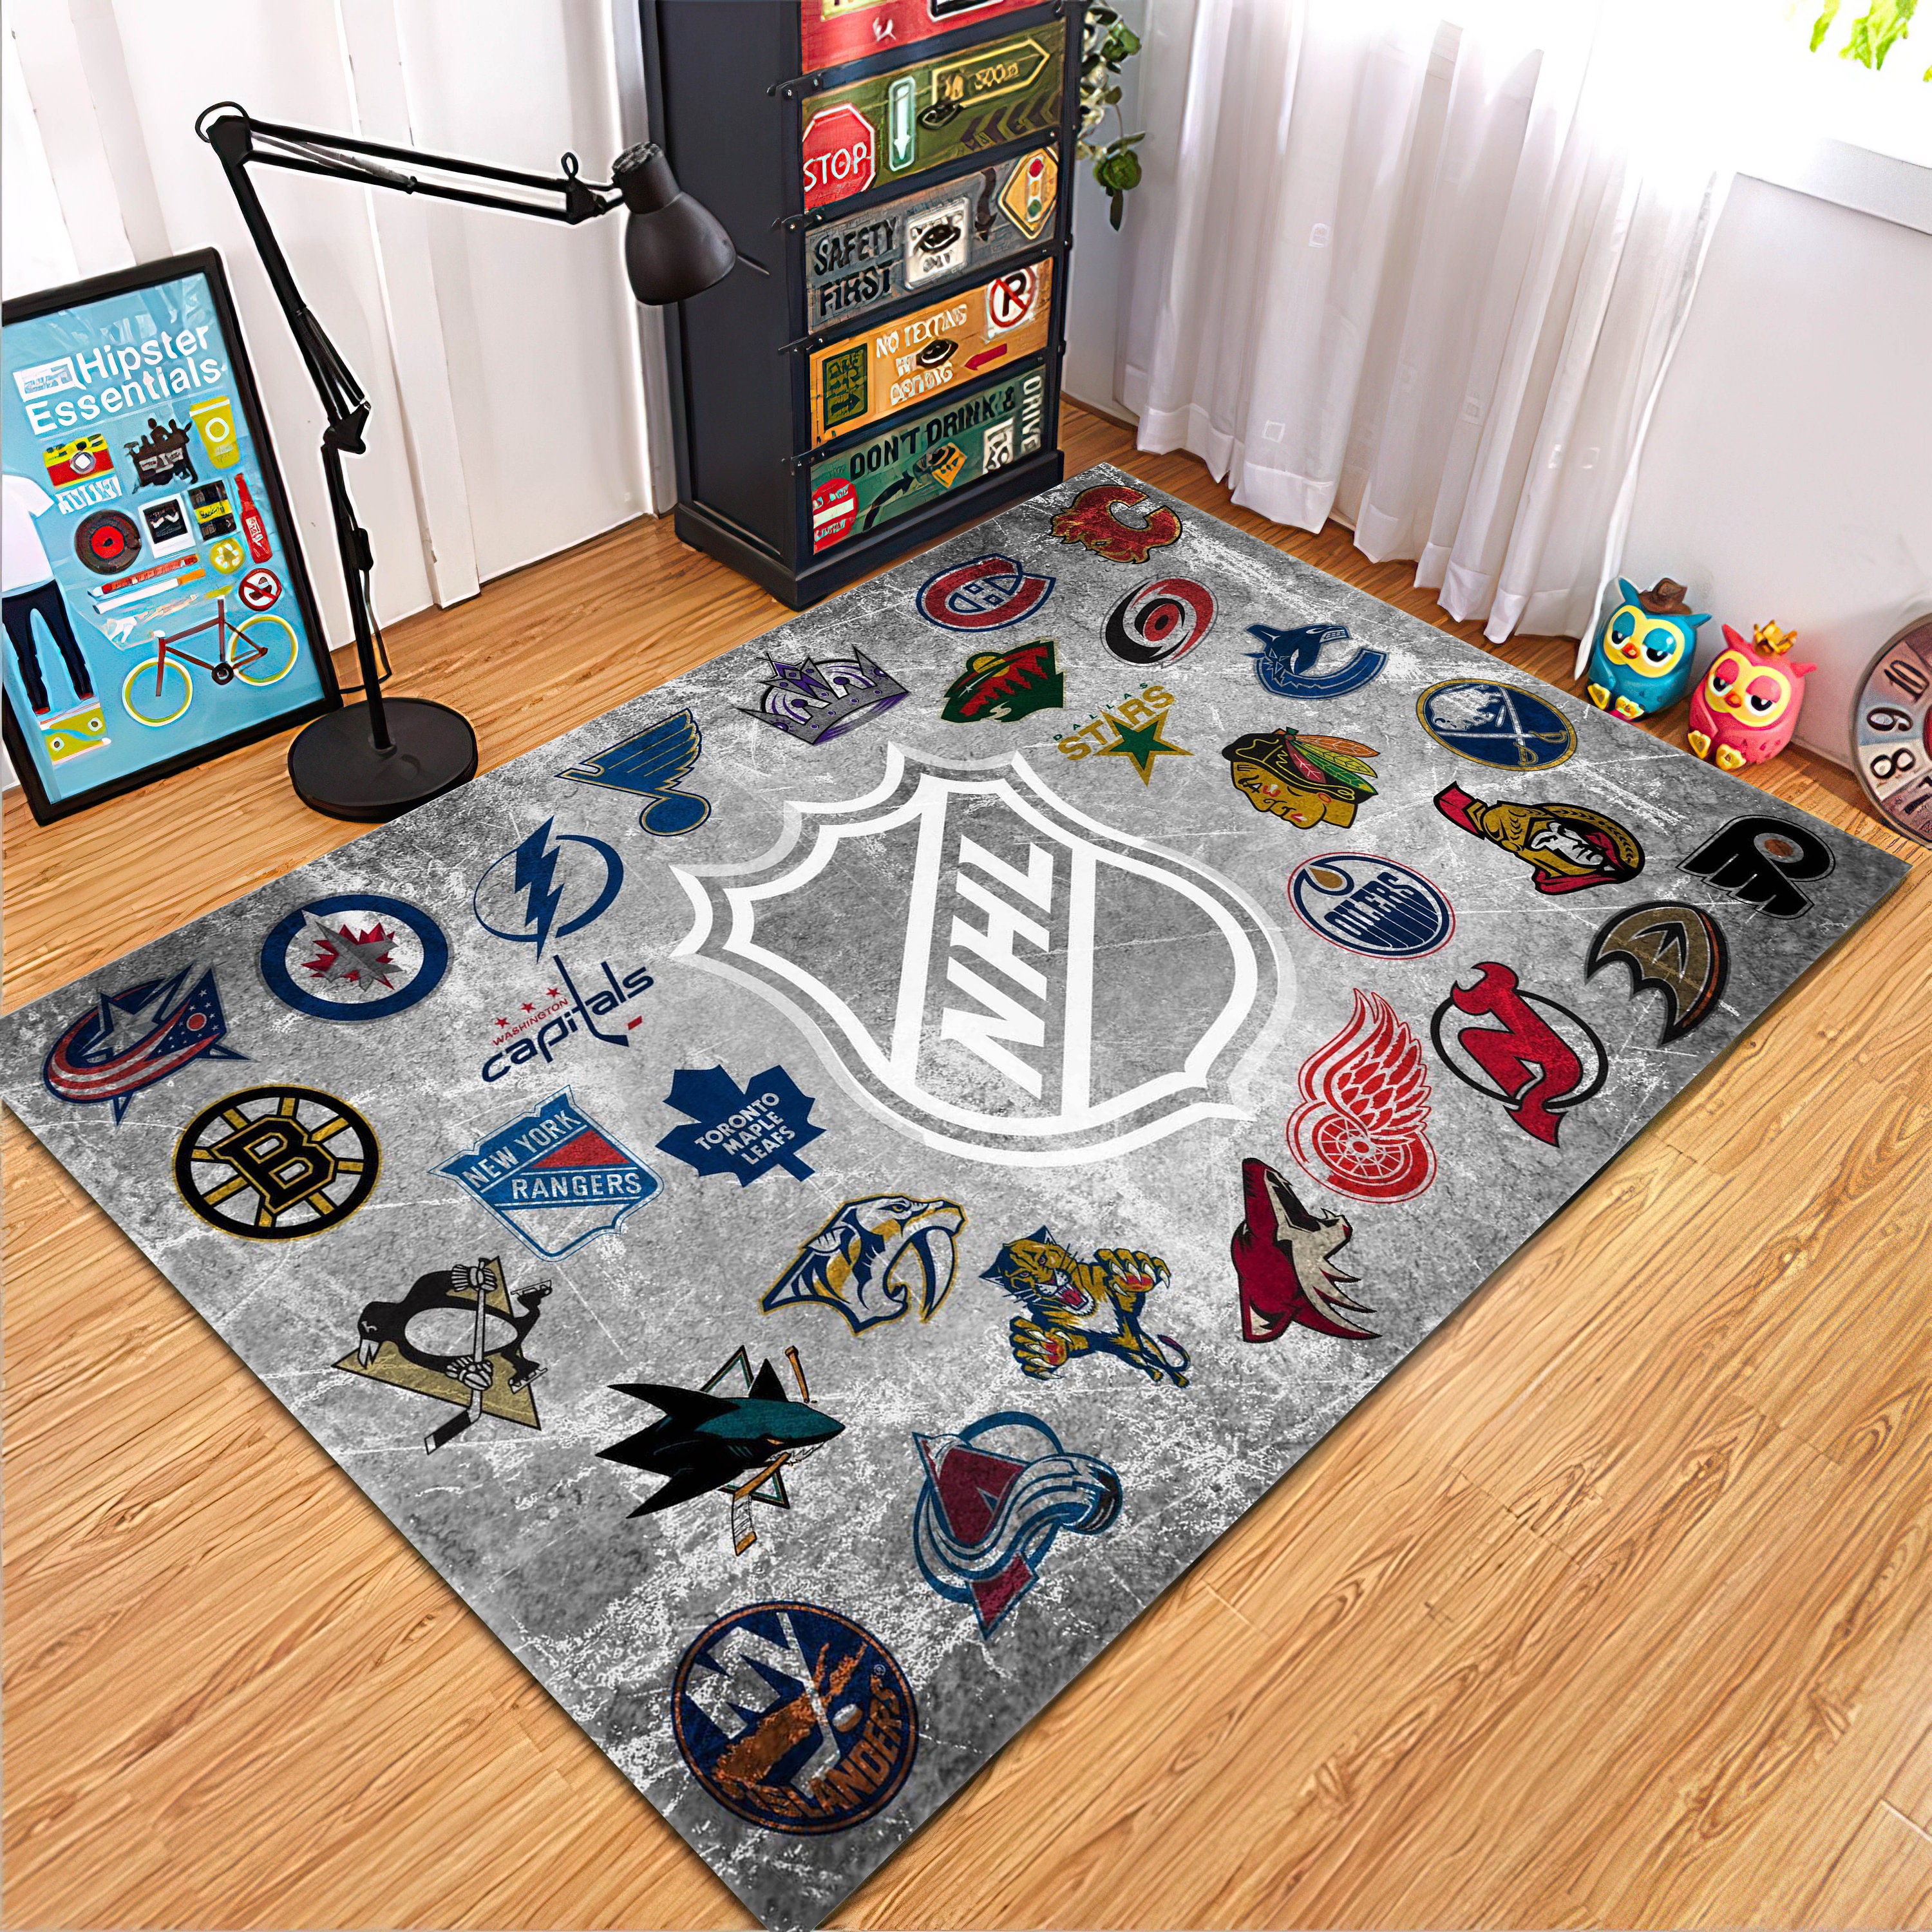 New Jersey Devils puck shaped floor mat